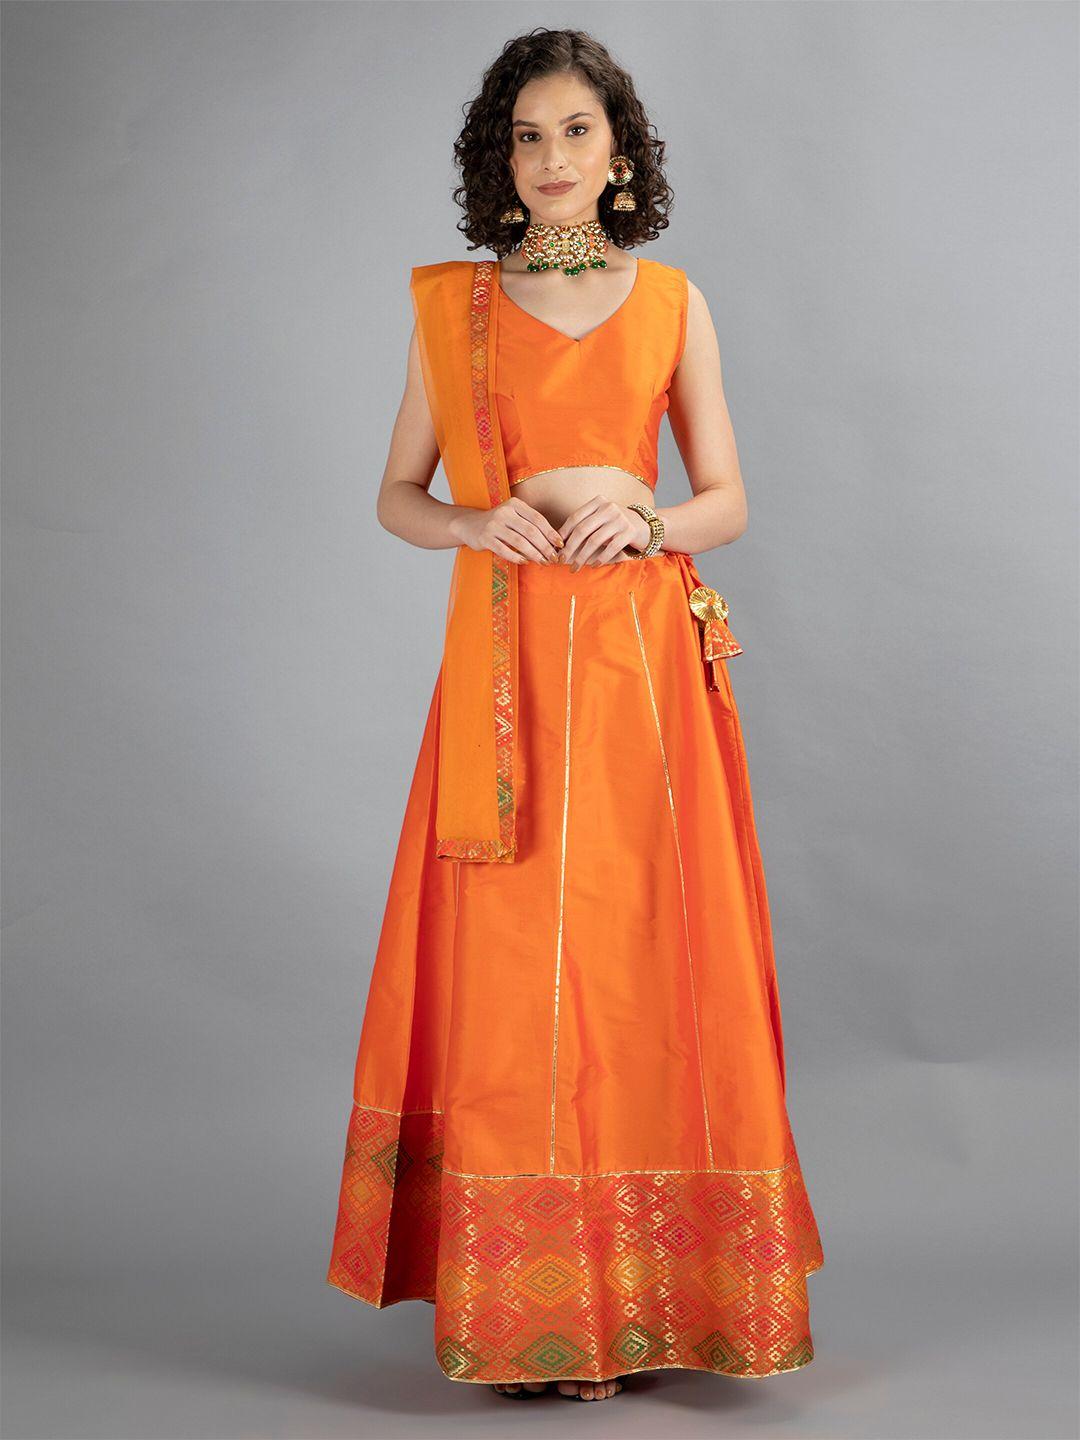 neudis woven design ready to wear lehenga & blouse with dupatta